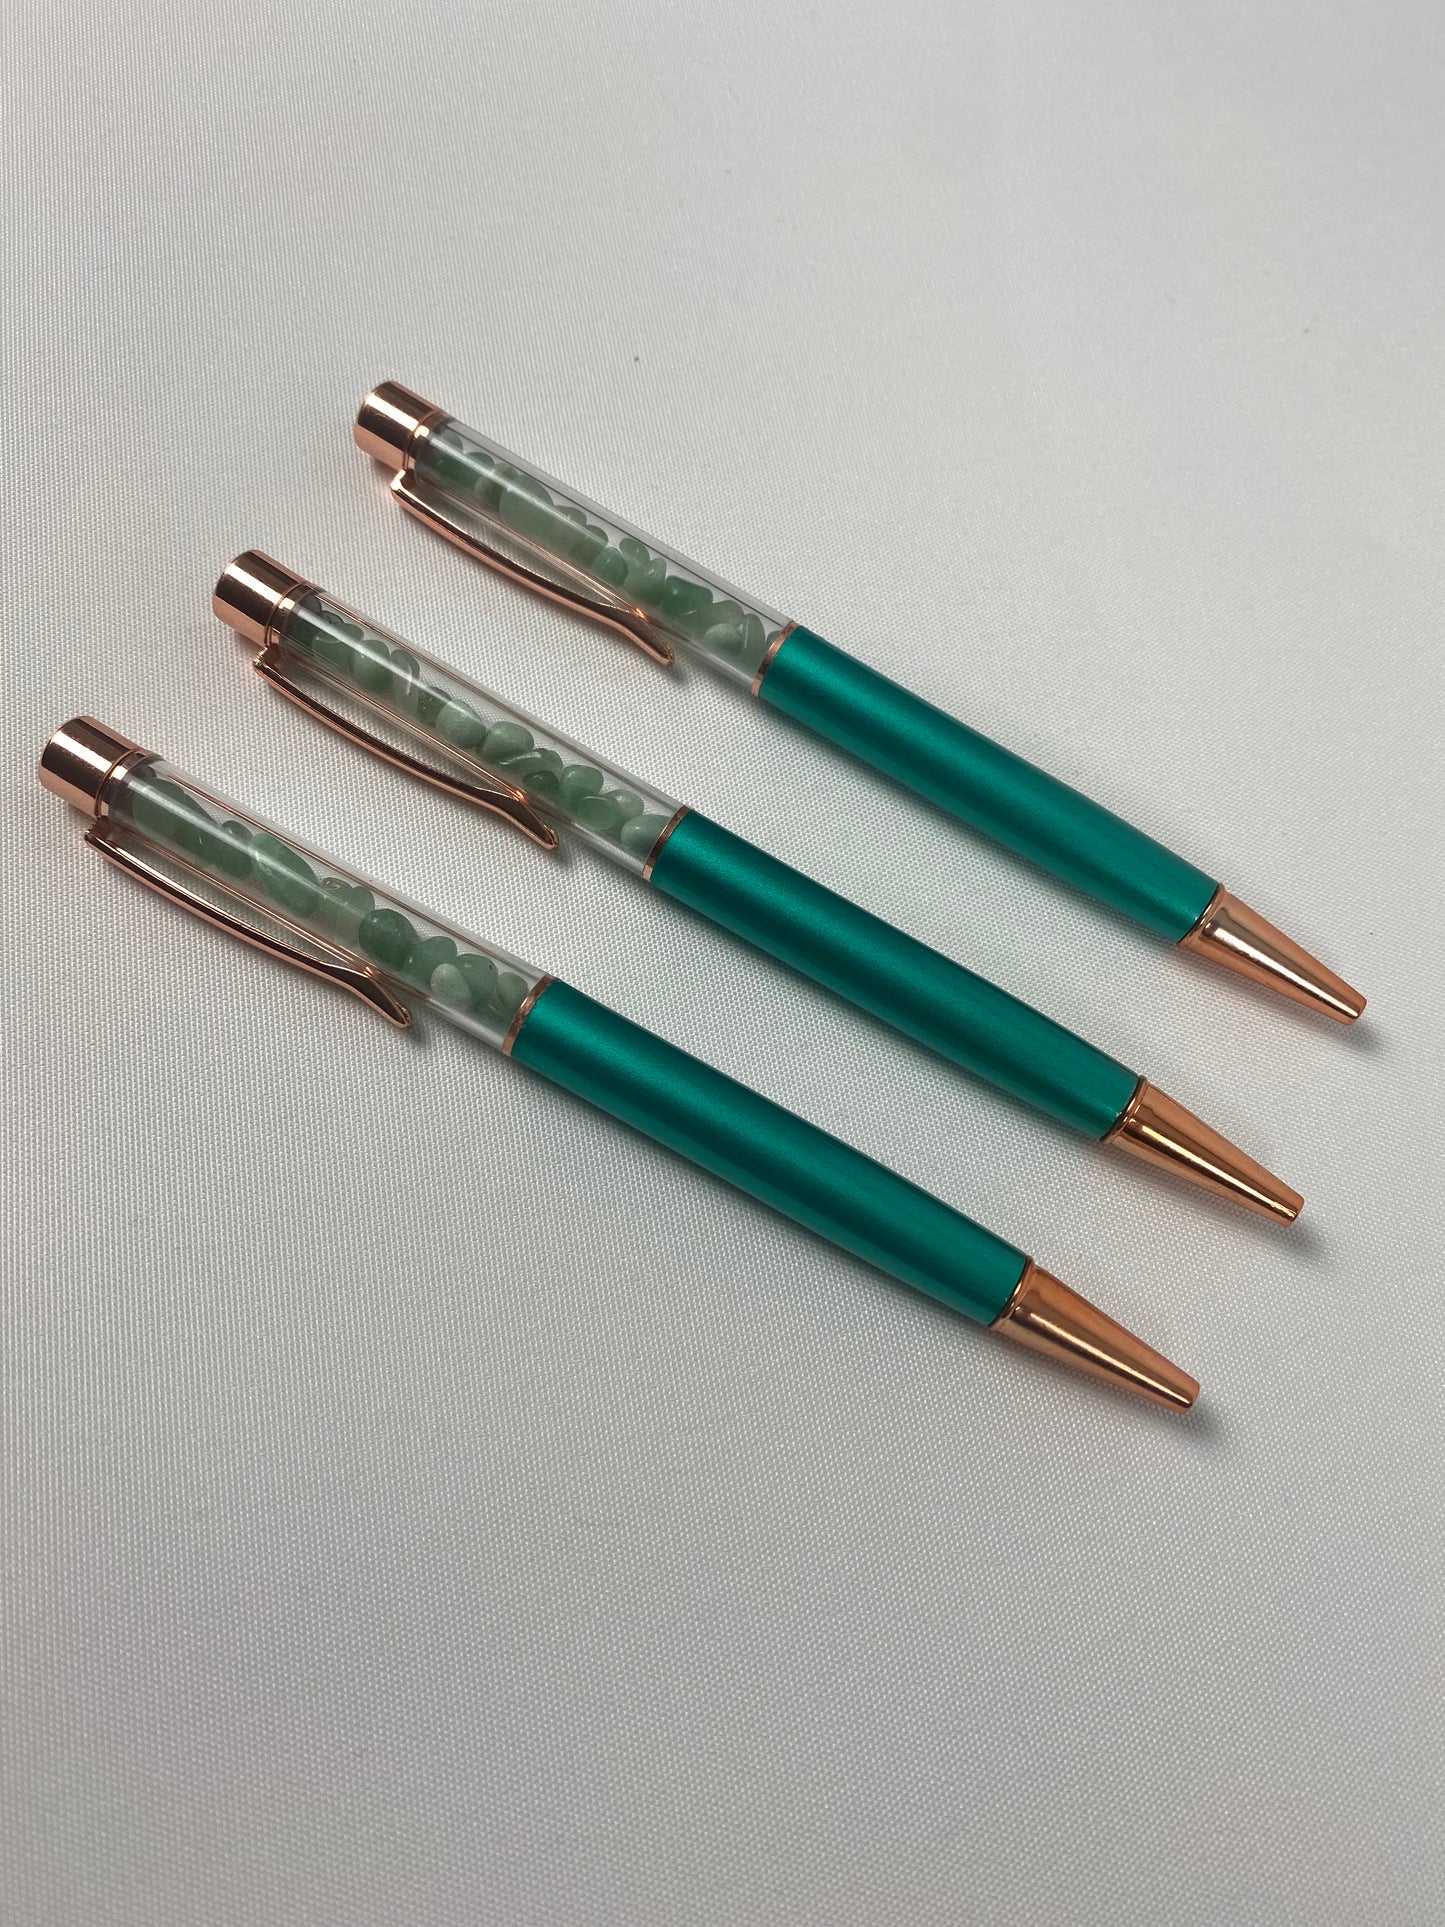 Crystal pens